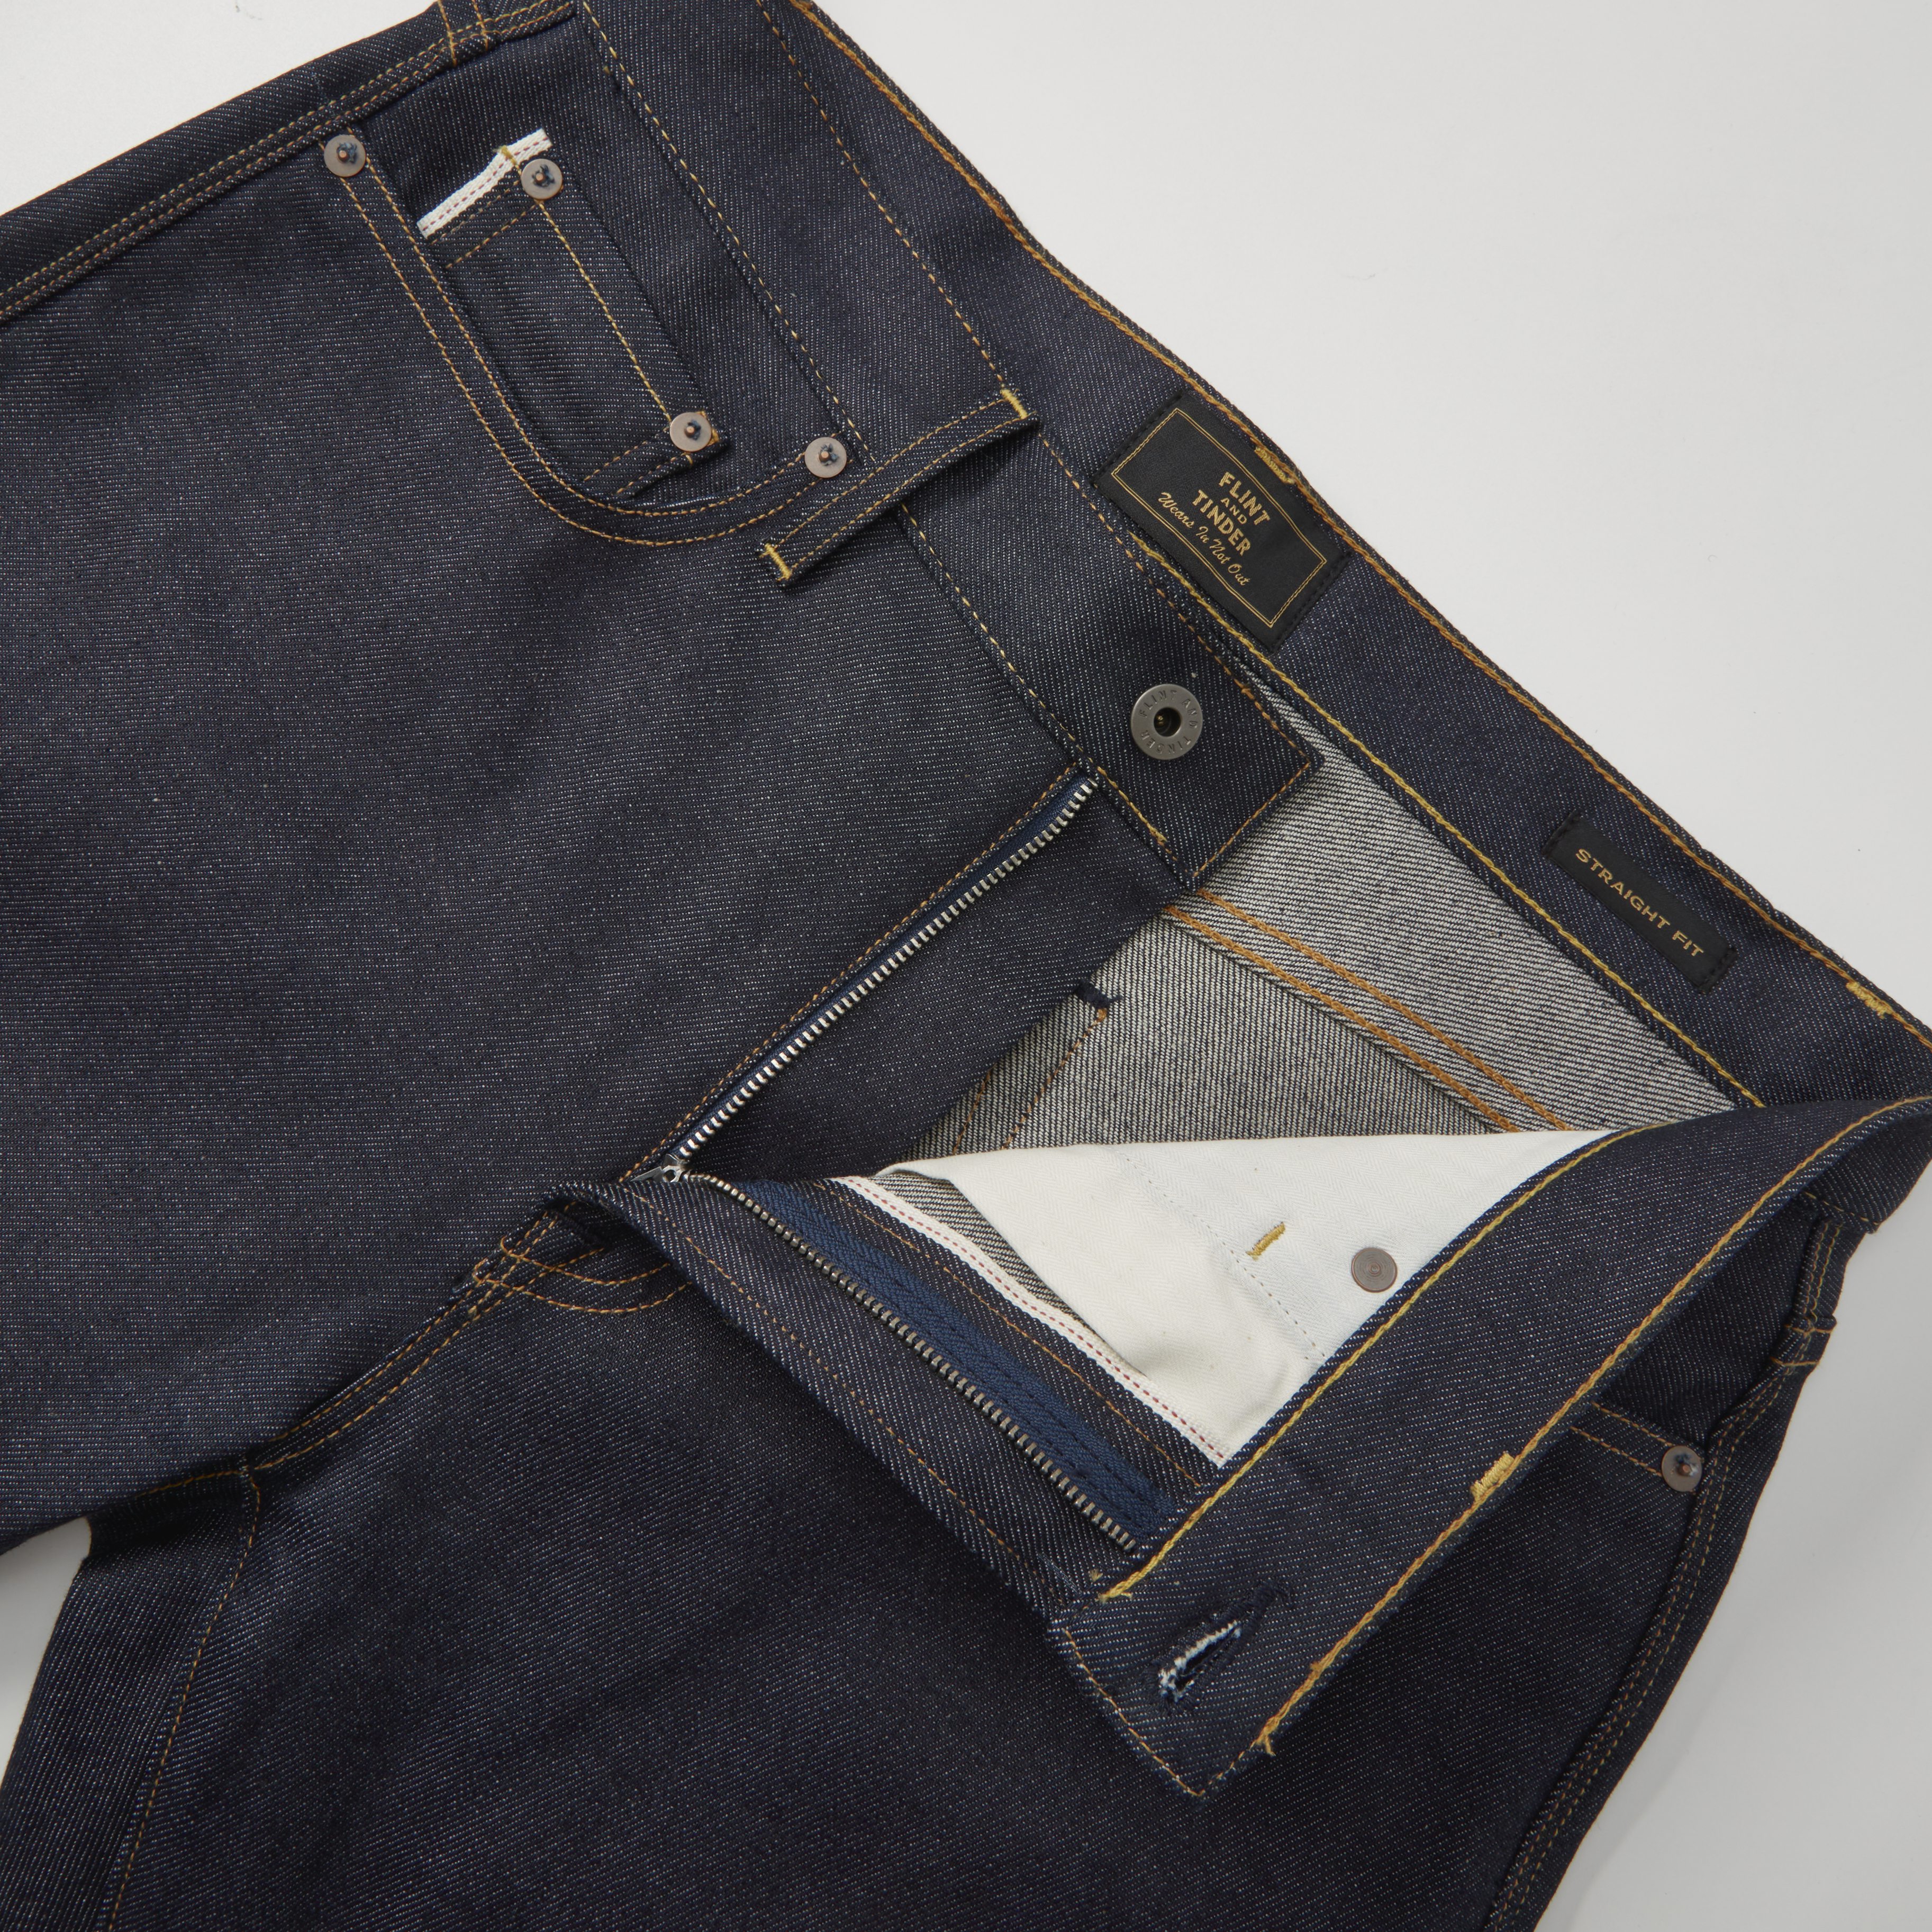 Jeans raw denim 13oz selvedge - Blugiallo - Tailoring reinvented